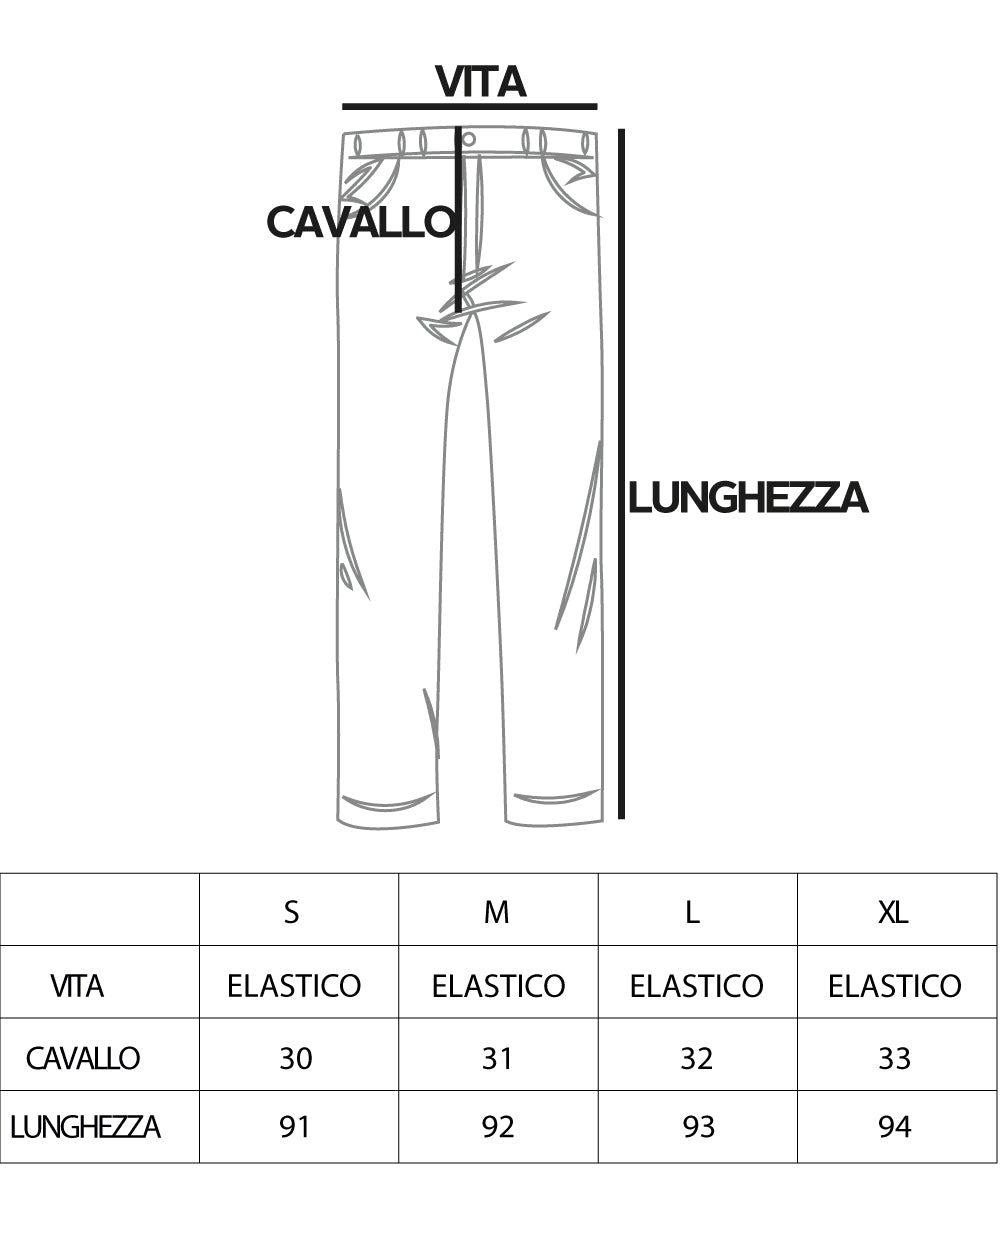 Men's Cargo Joggers Drawstring Pants Solid Color Cream Pockets GIOSAL-P5747A